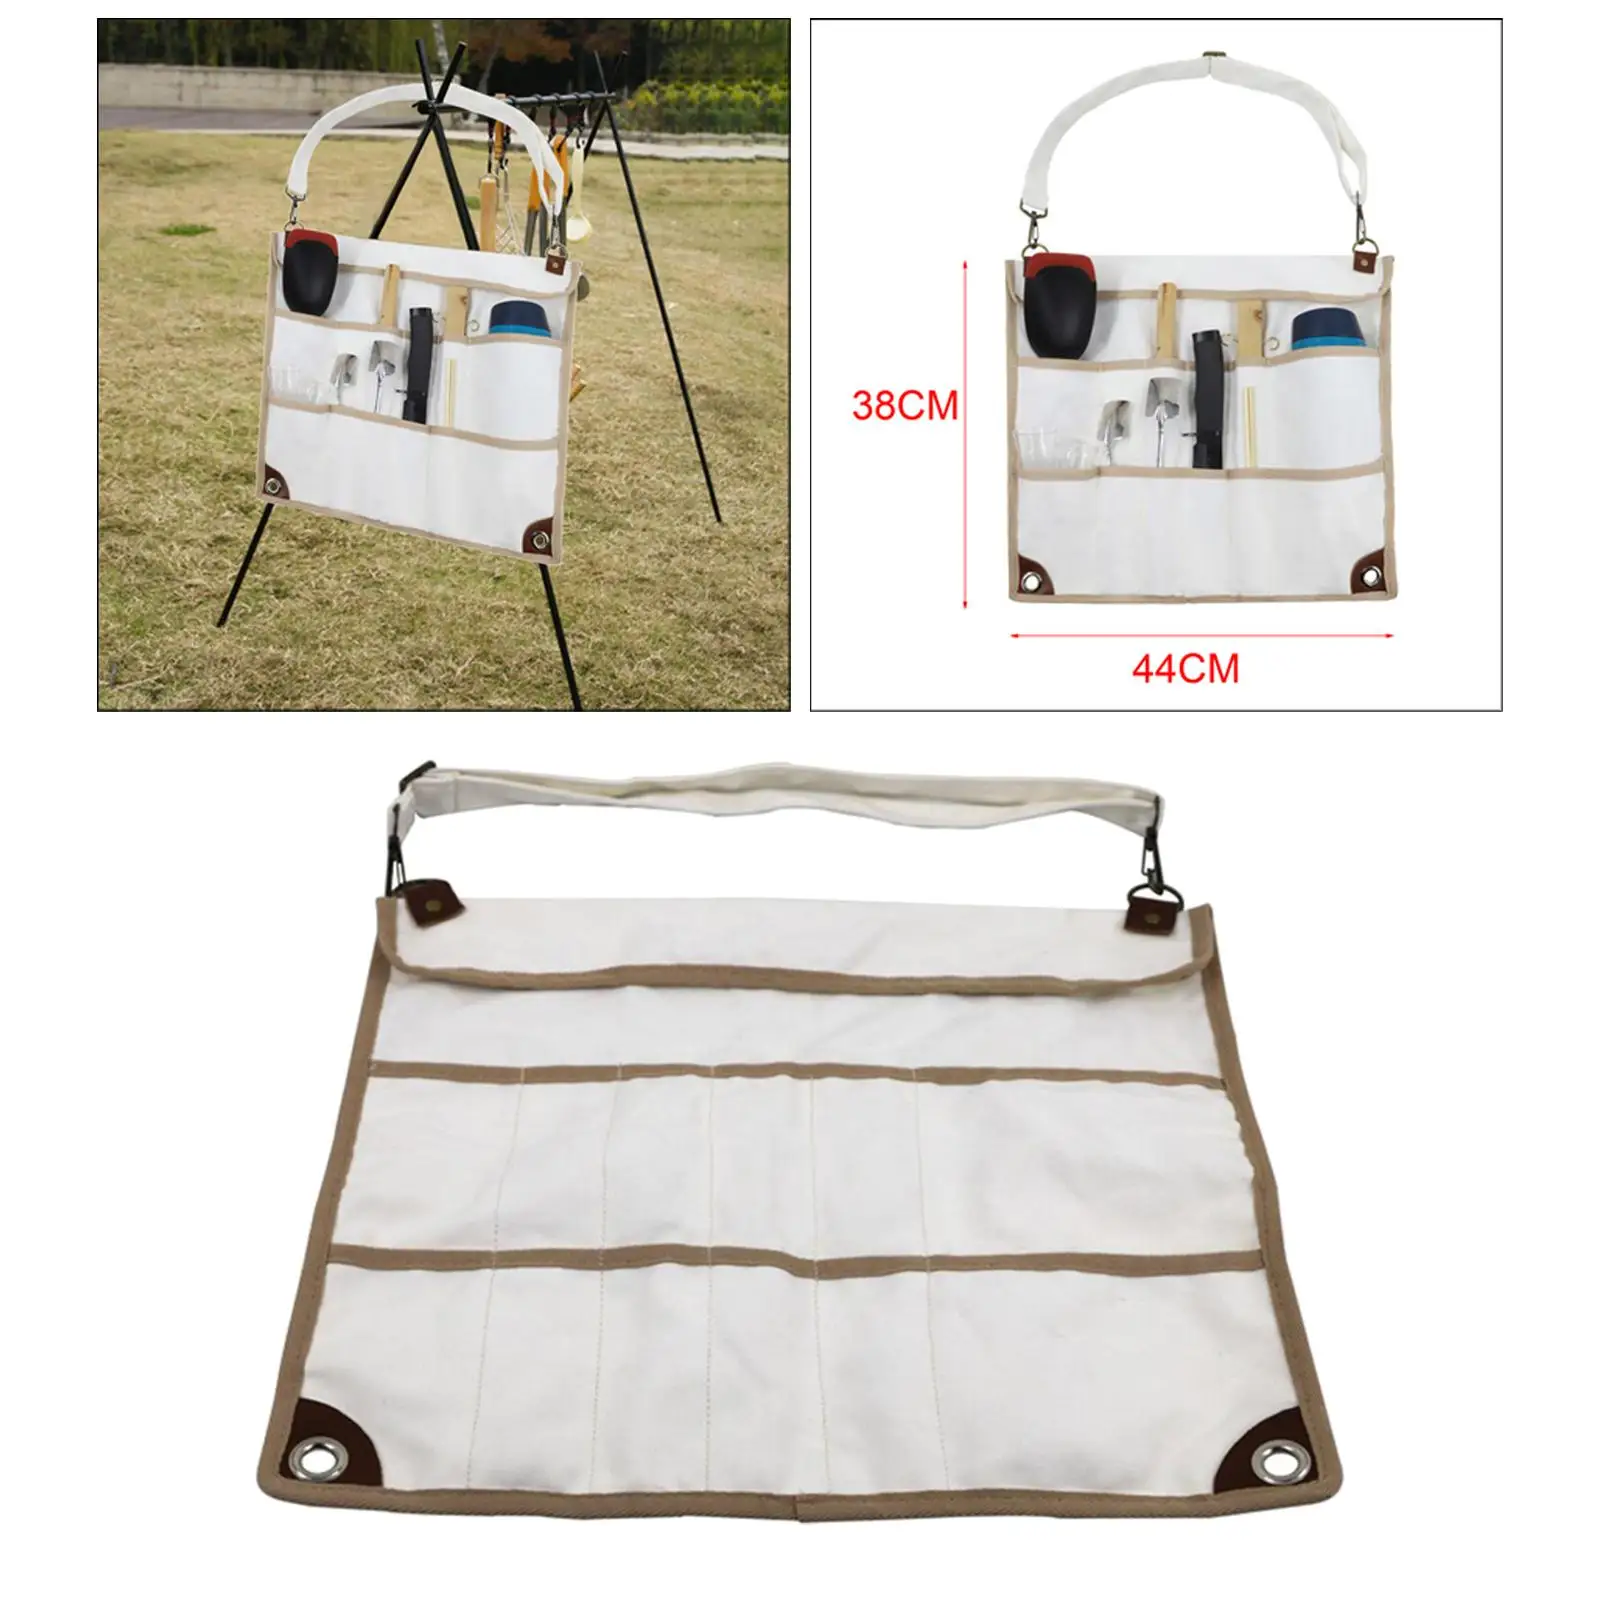 Portable Outdoor Camping Tableware Storage Bag Organizer Bags